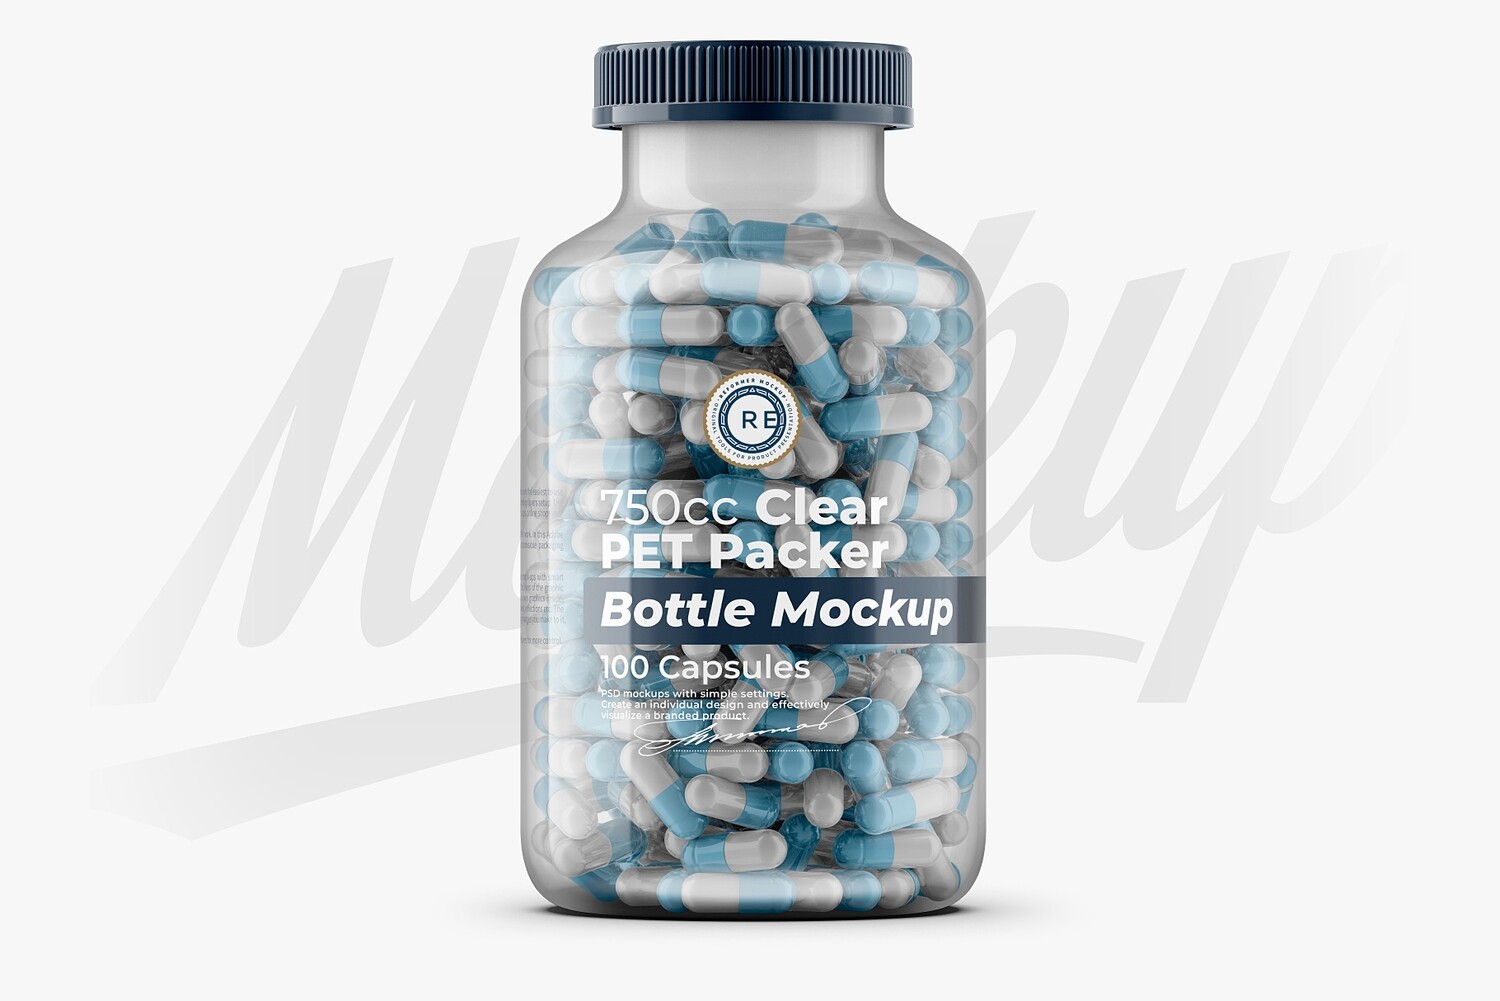 Clear Pills Bottle Mockup 750cc